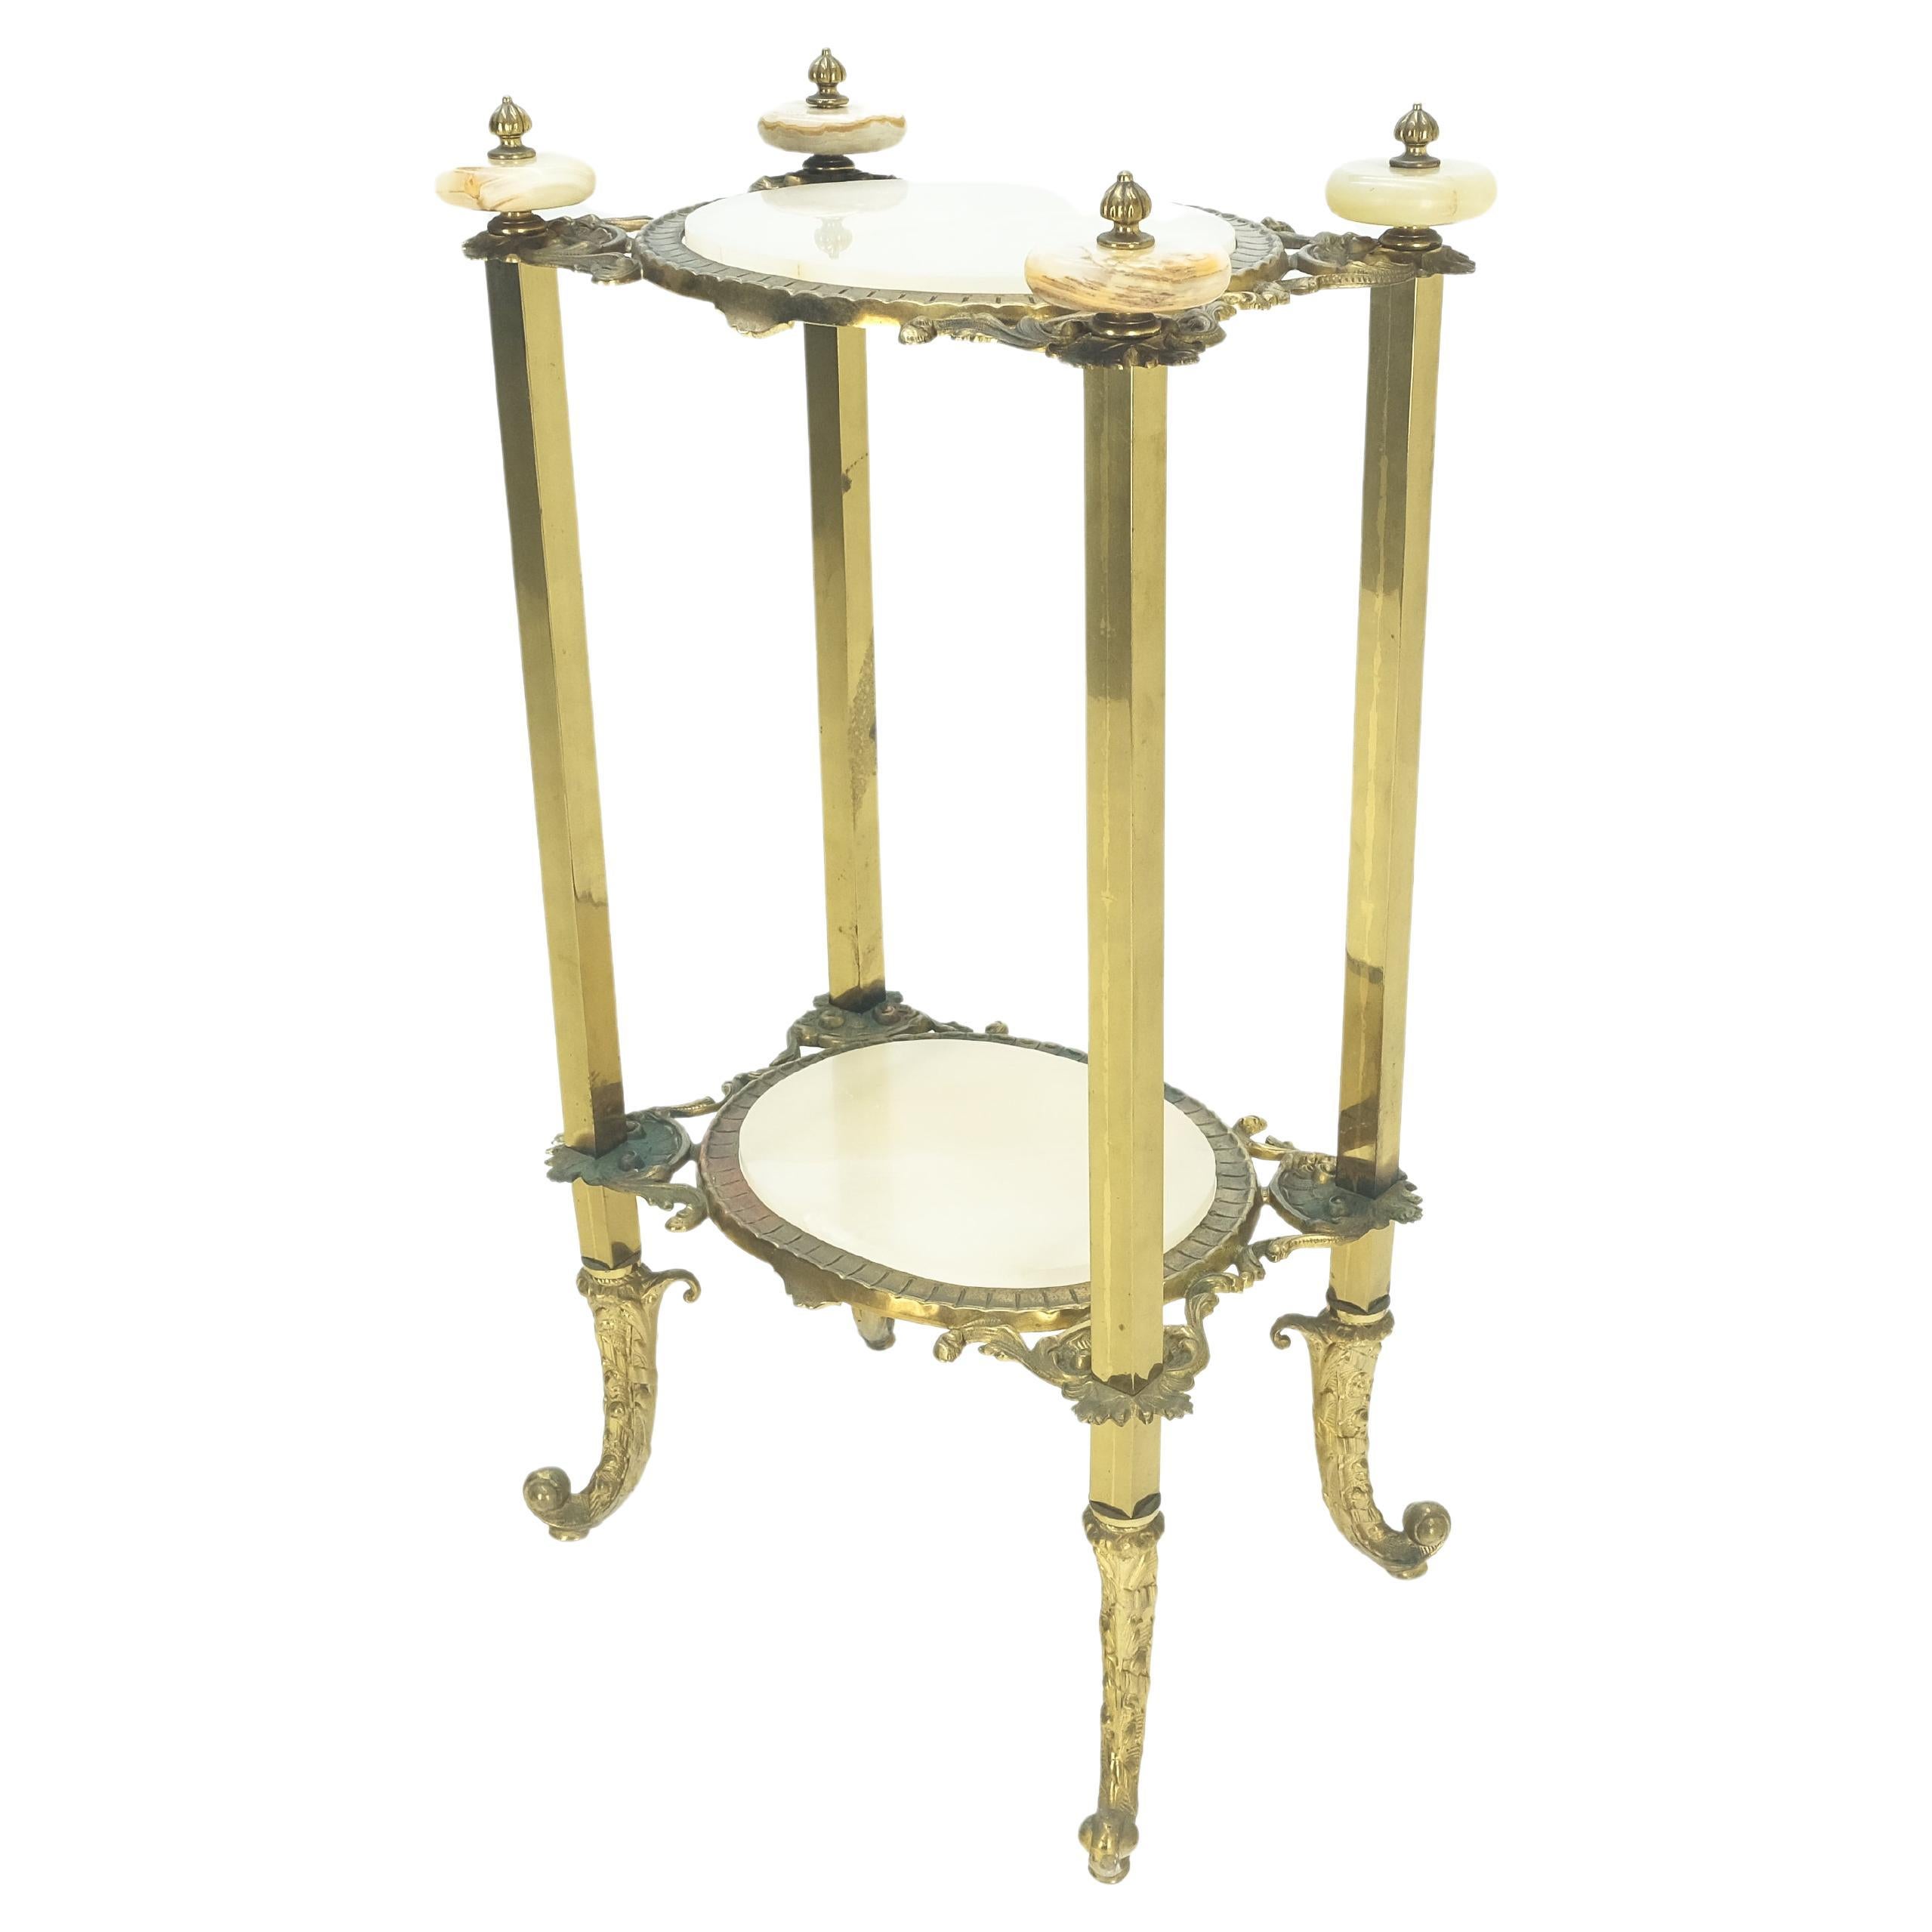 Viktorianischen Stil Messing Oval Onyx Marmor gedreht Finials Lampe Beistelltisch Stand MINT